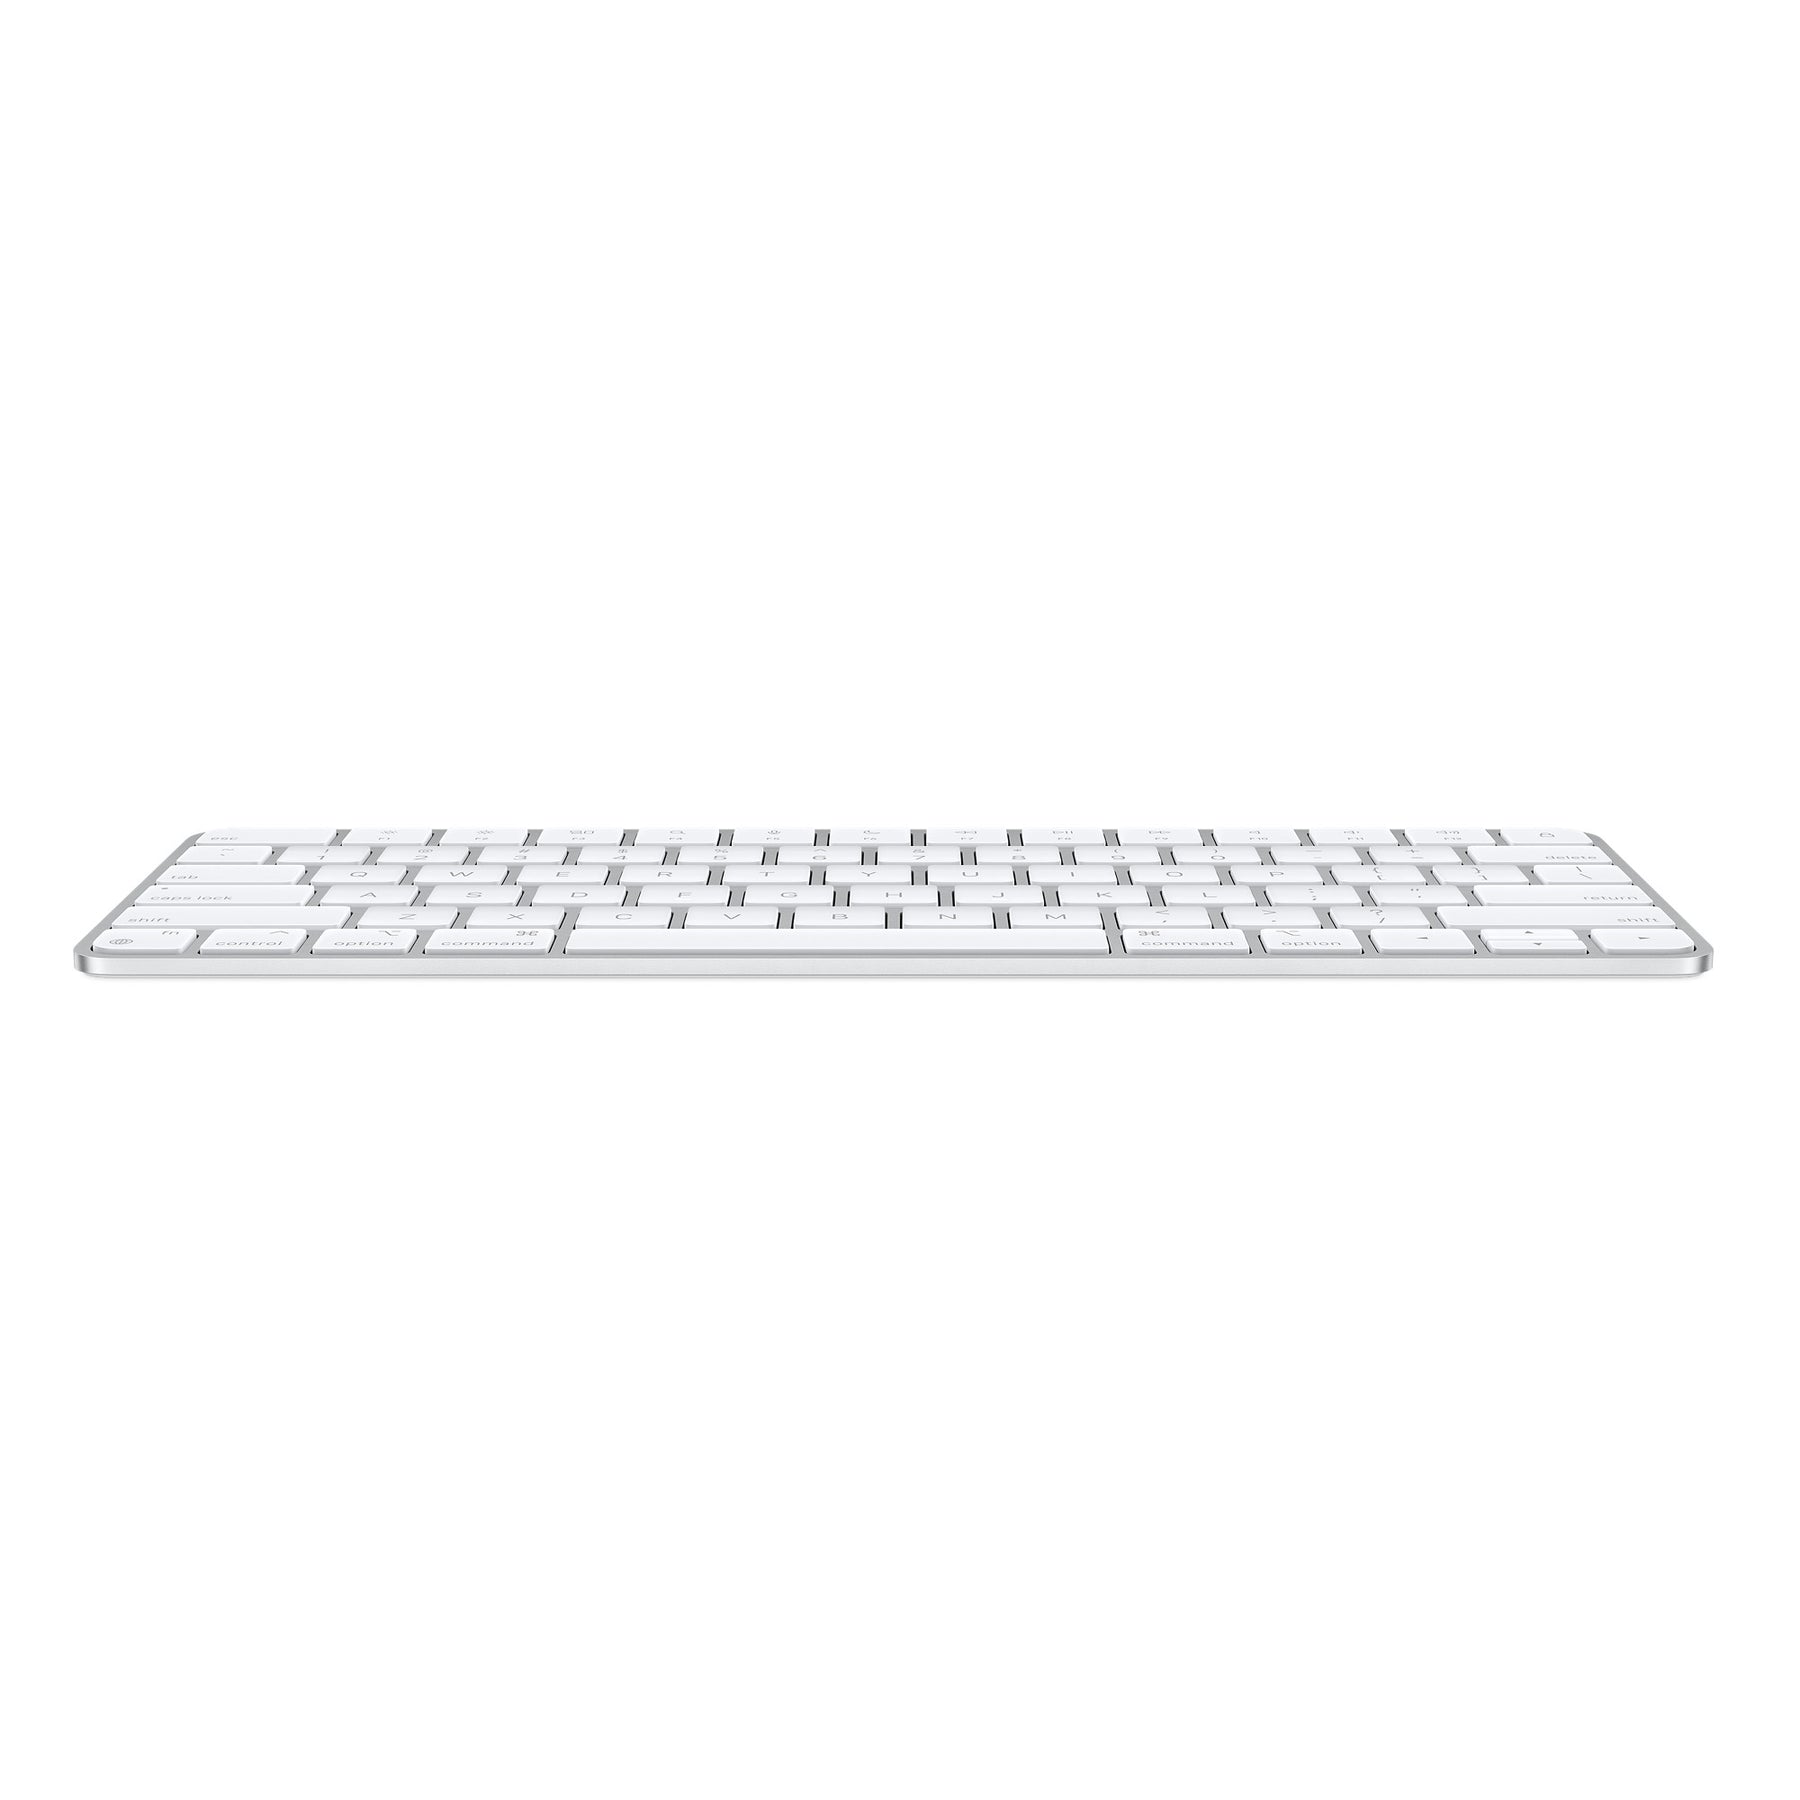 Apple Magic Keyboard (New)